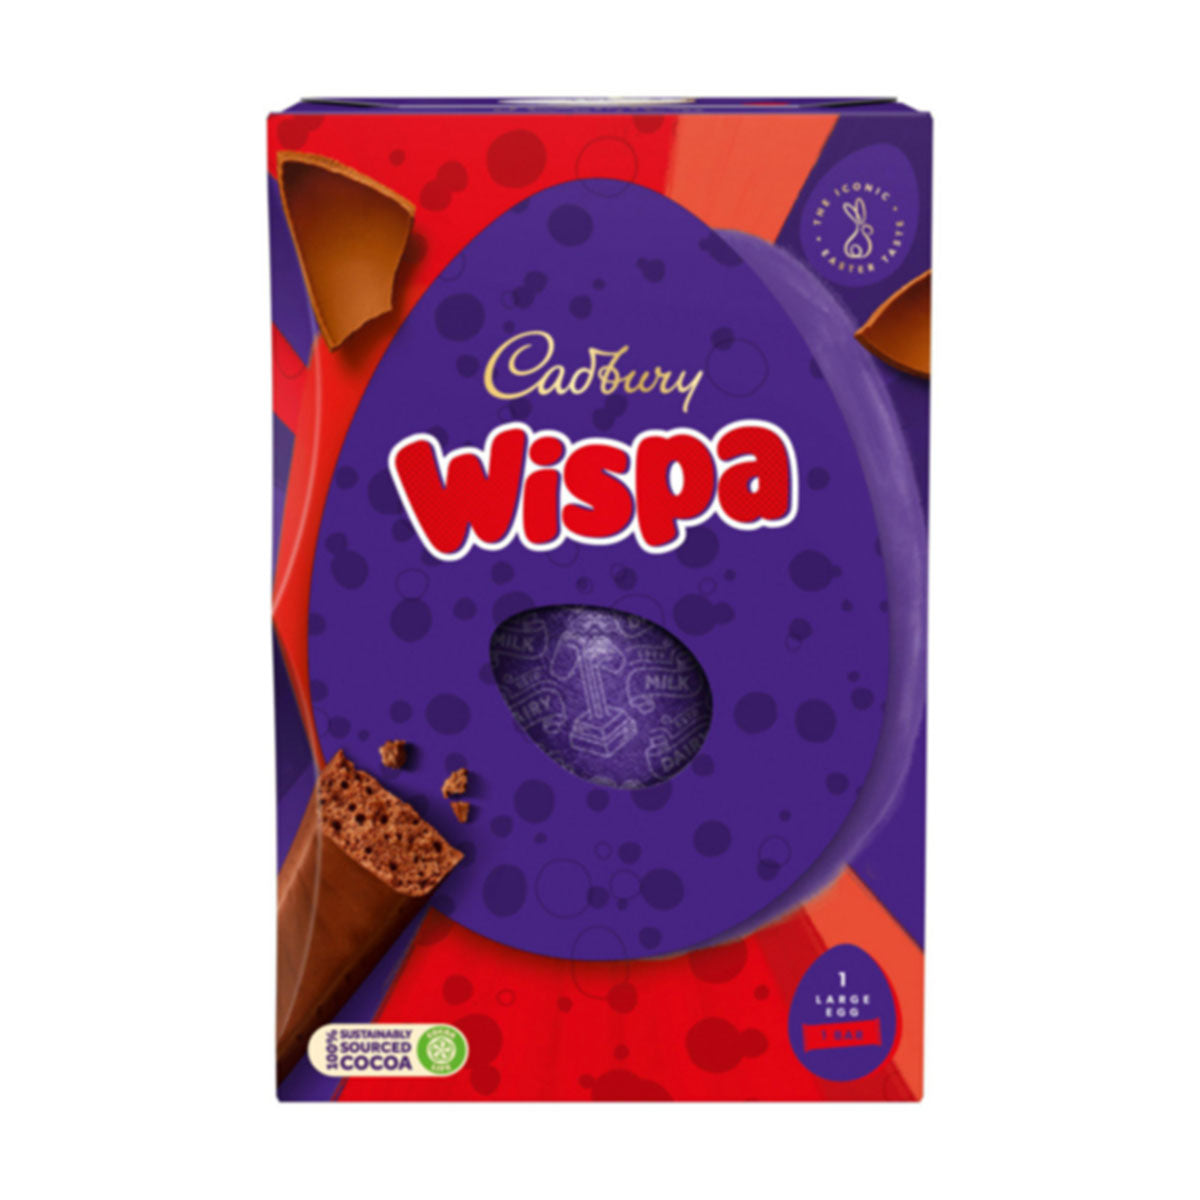 Easter Egg - Cadbury Wispa Egg